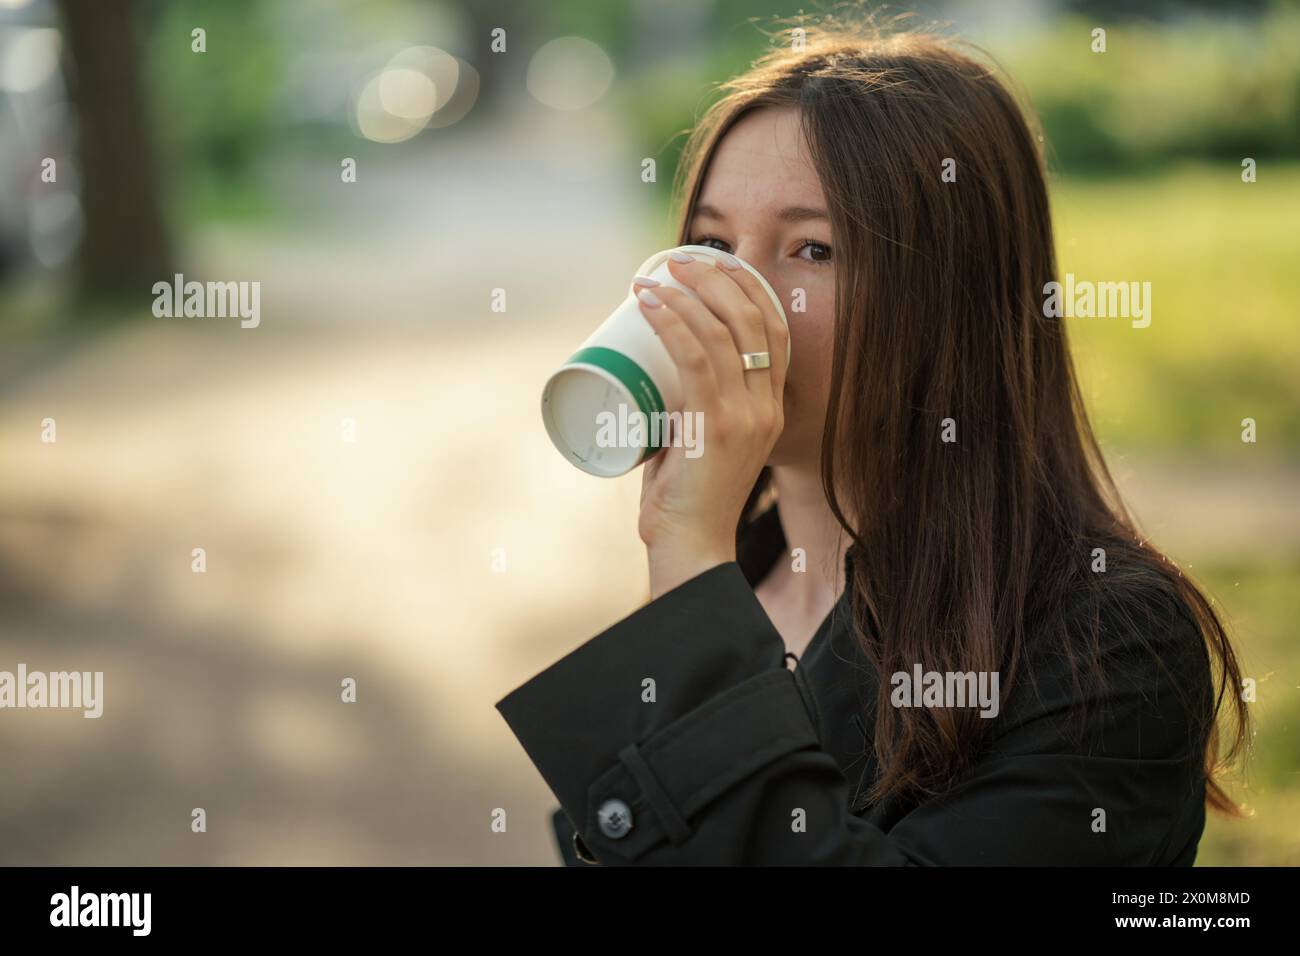 Teenage girl drinking coffee. Stock Photo